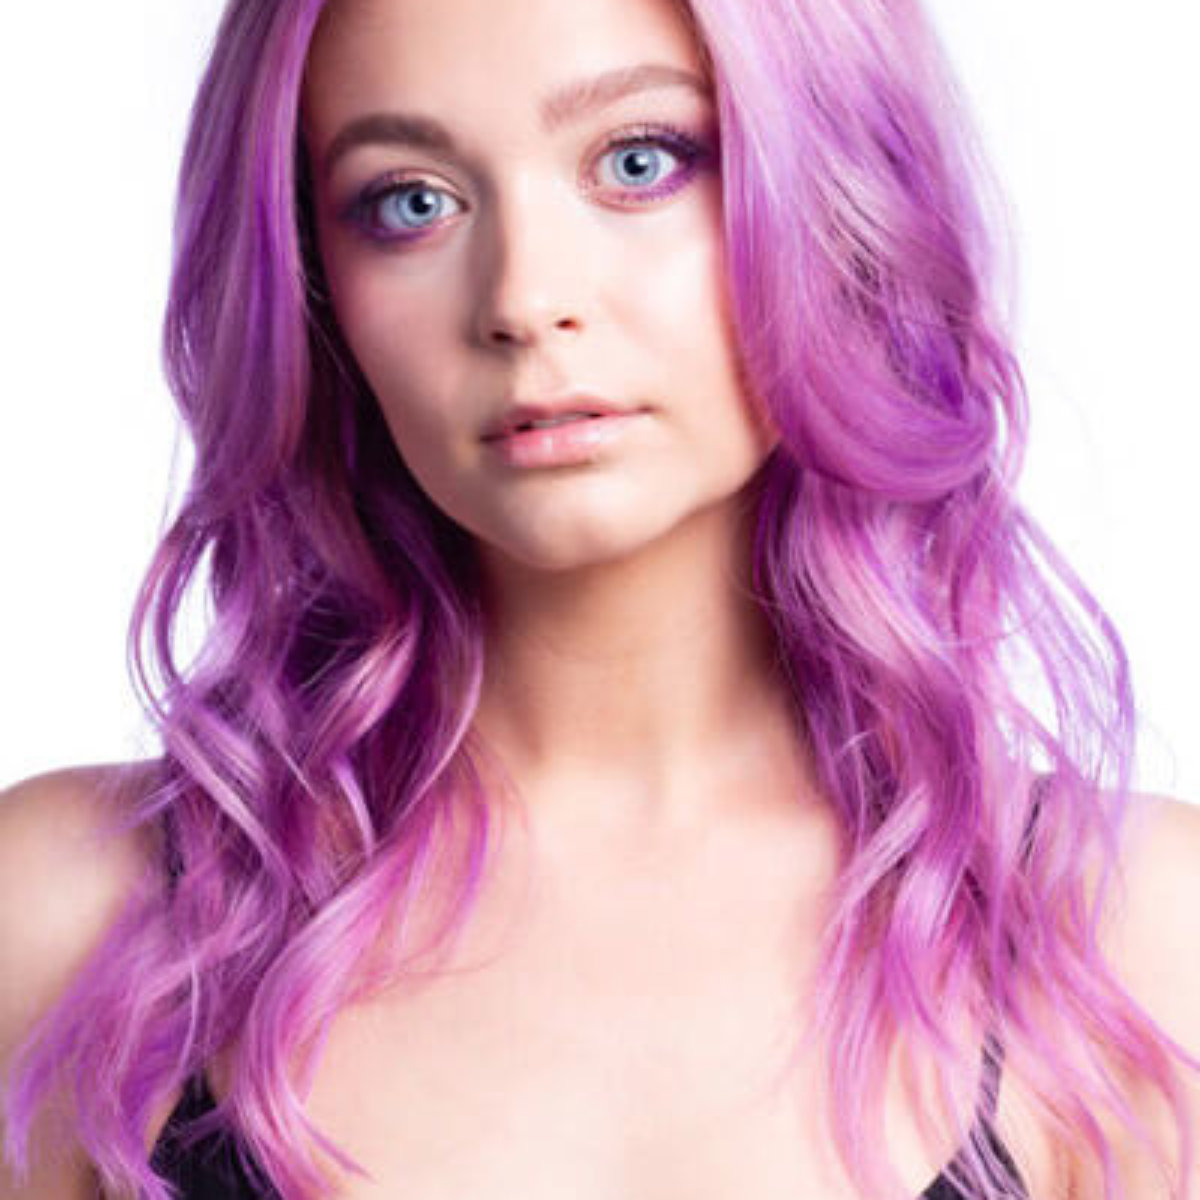 Larisa Love hair model showing vibrant purple hair color